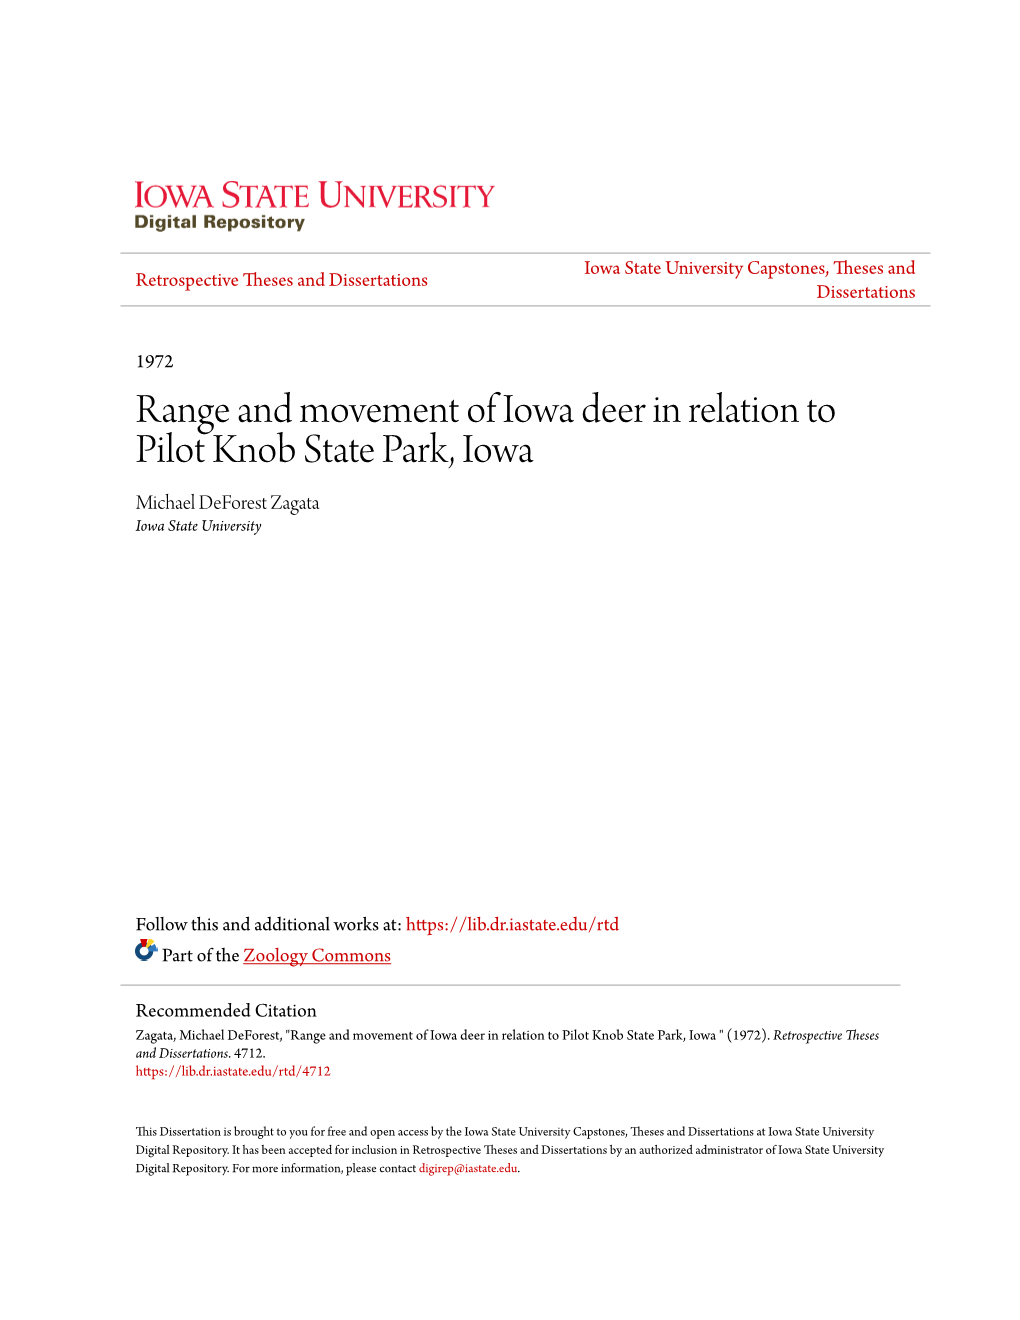 Range and Movement of Iowa Deer in Relation to Pilot Knob State Park, Iowa Michael Deforest Zagata Iowa State University